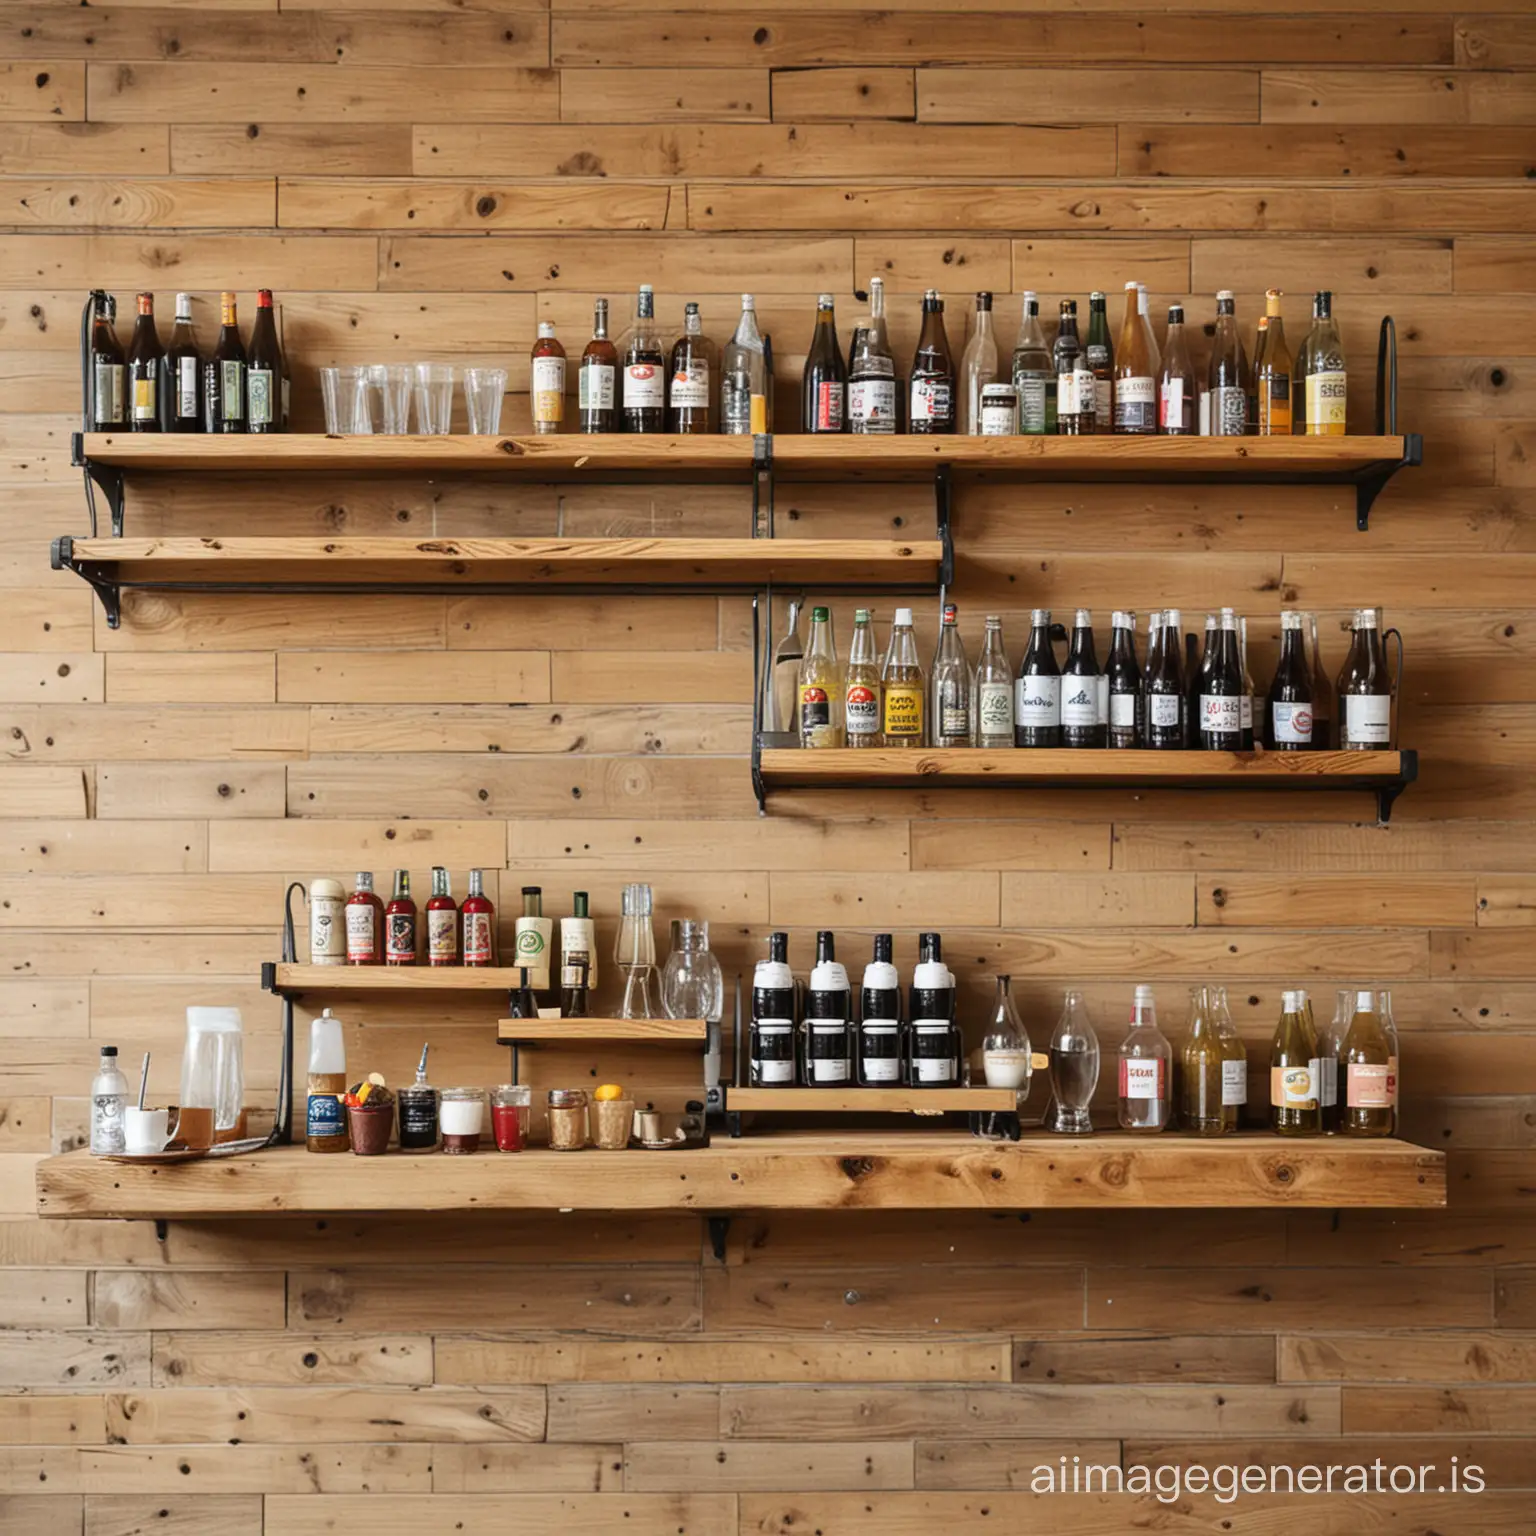 Cafe drinks and food racks on wall of wood